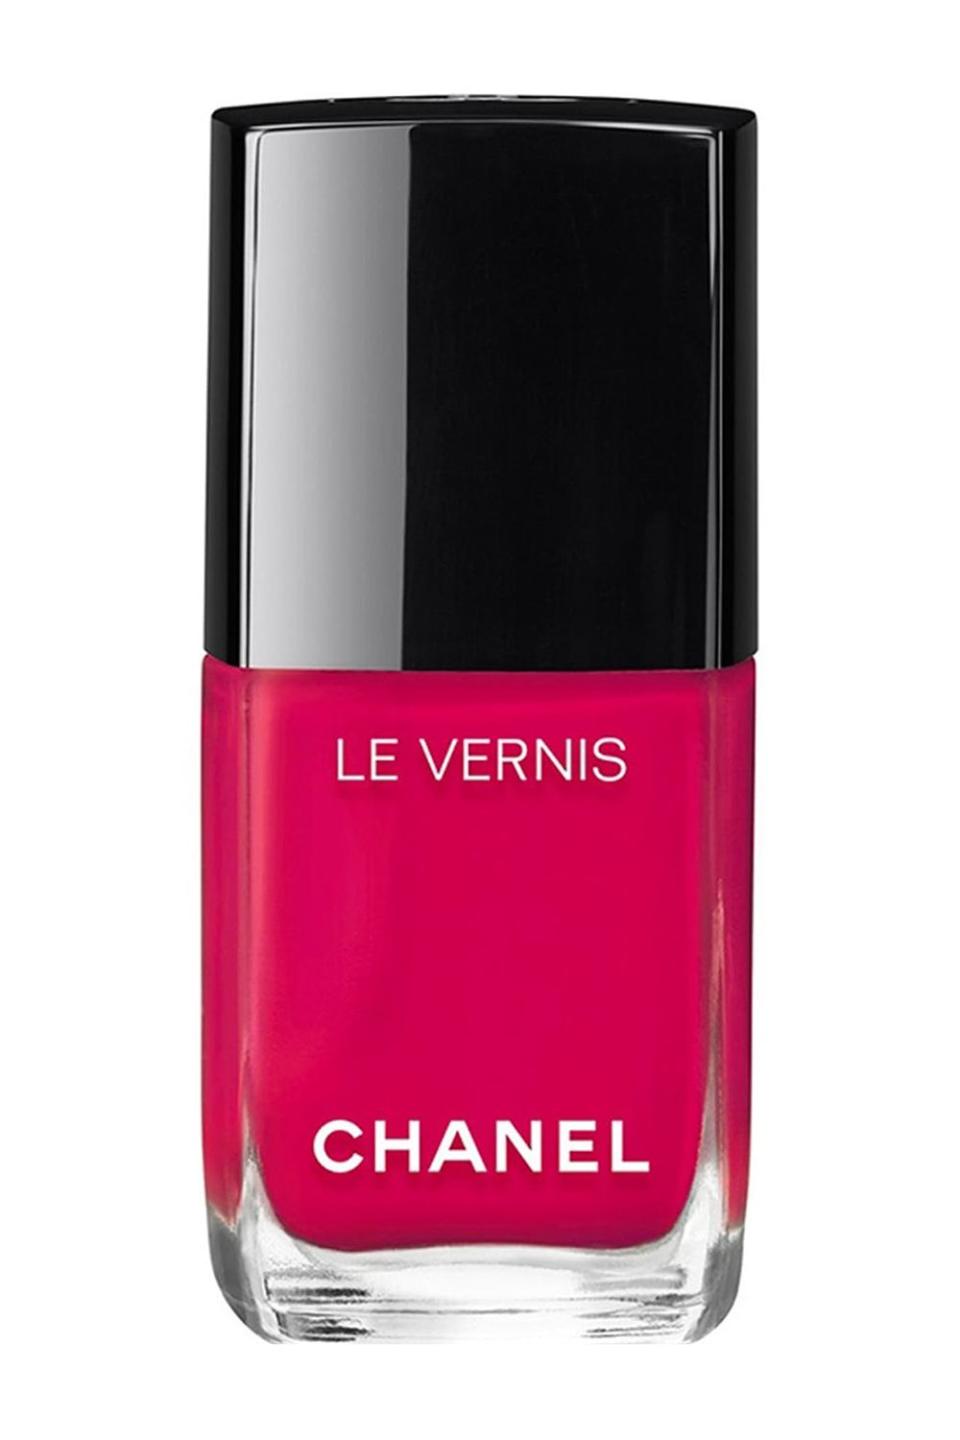 9) Chanel Le Vernis Longwear Nail Colour in Camelia